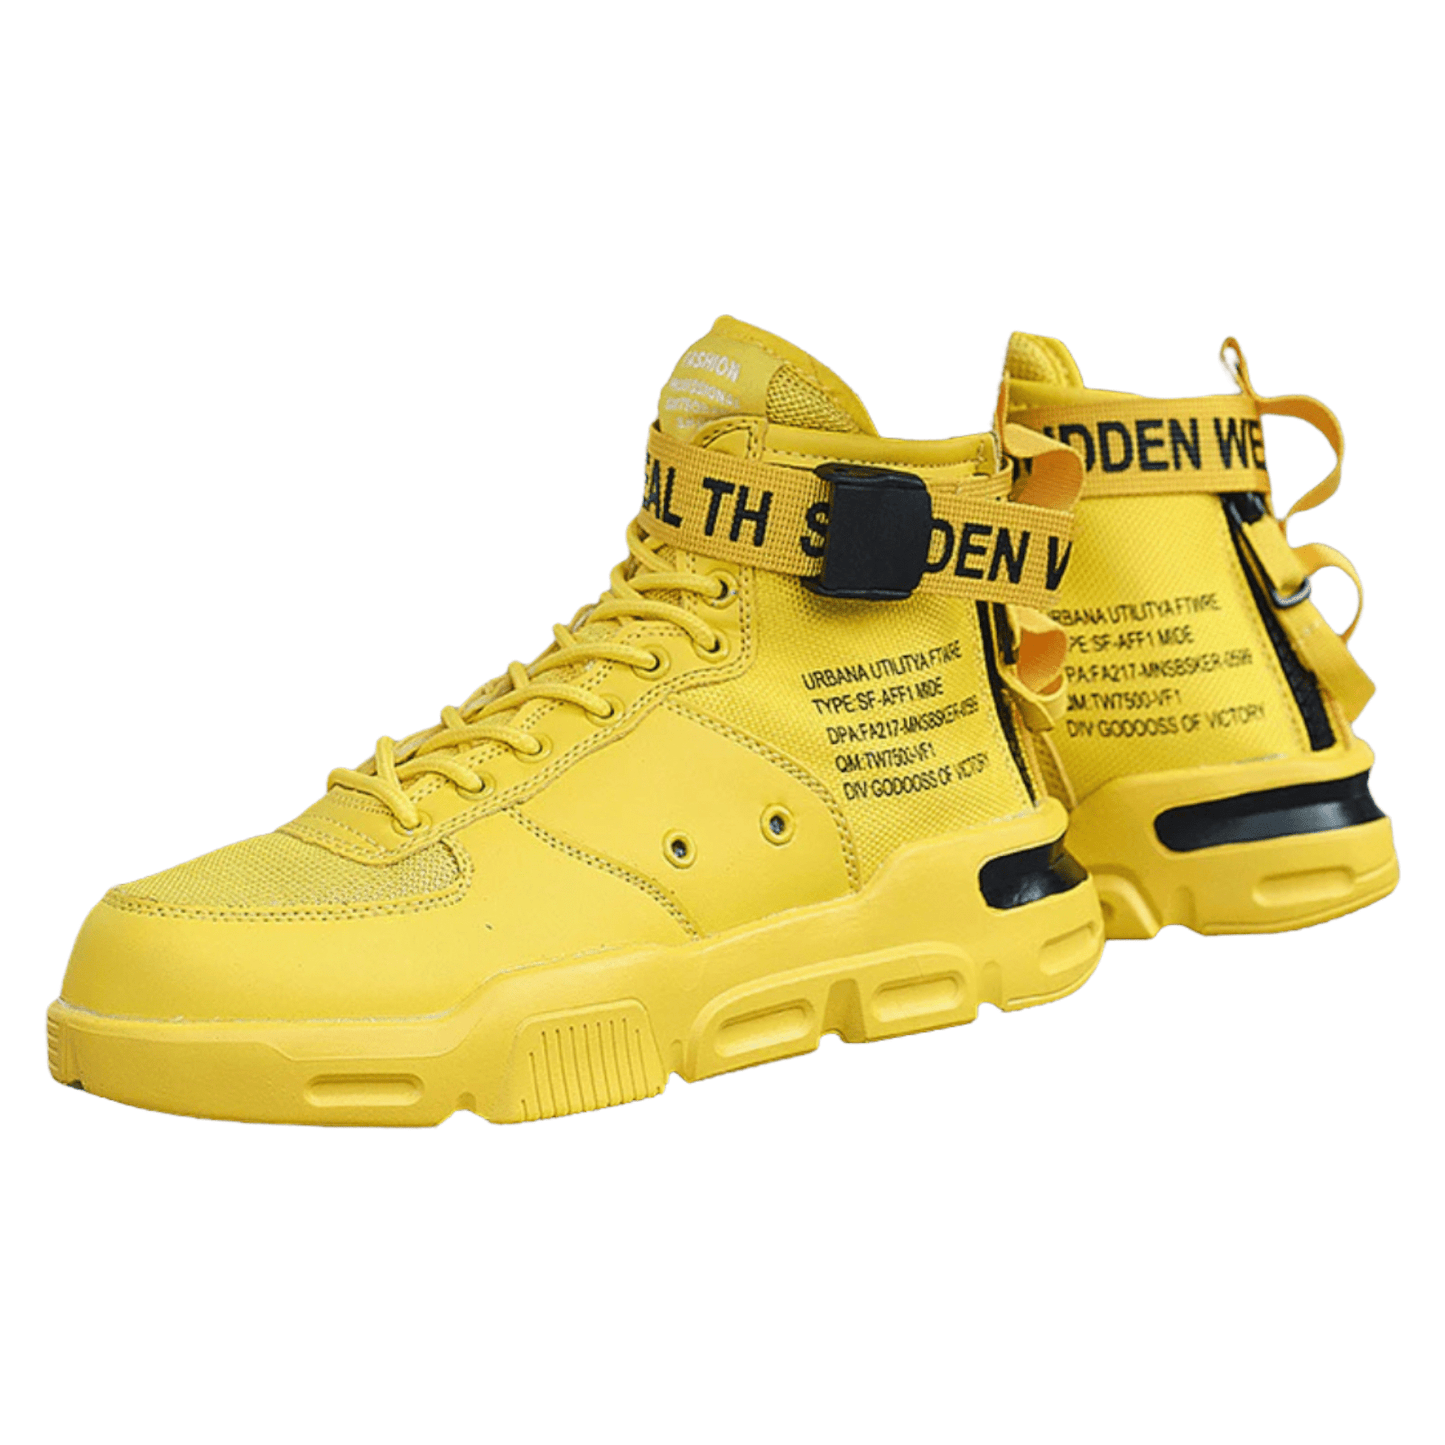 yellow sneakers urbana flashlander left side pair